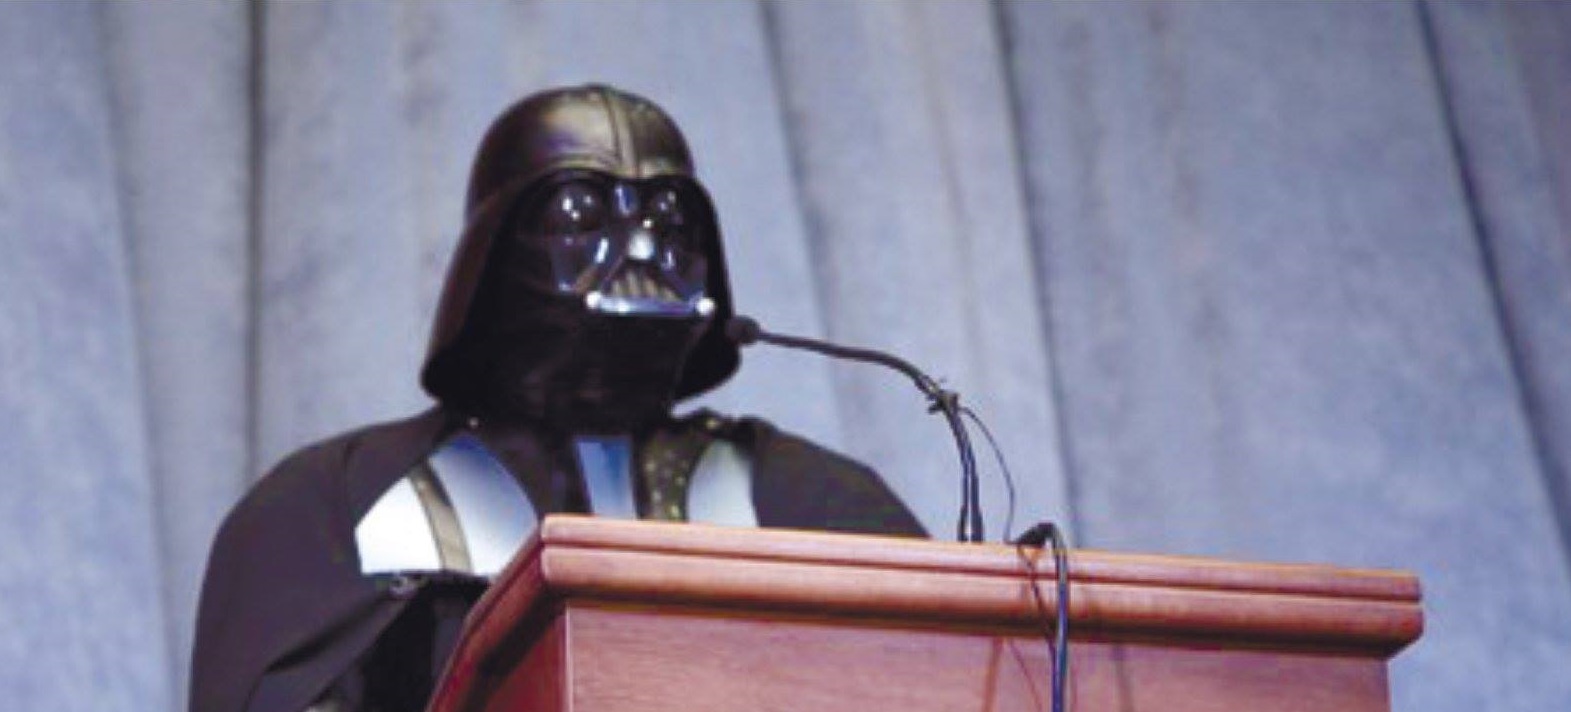 Darth Vader addresses the crowd